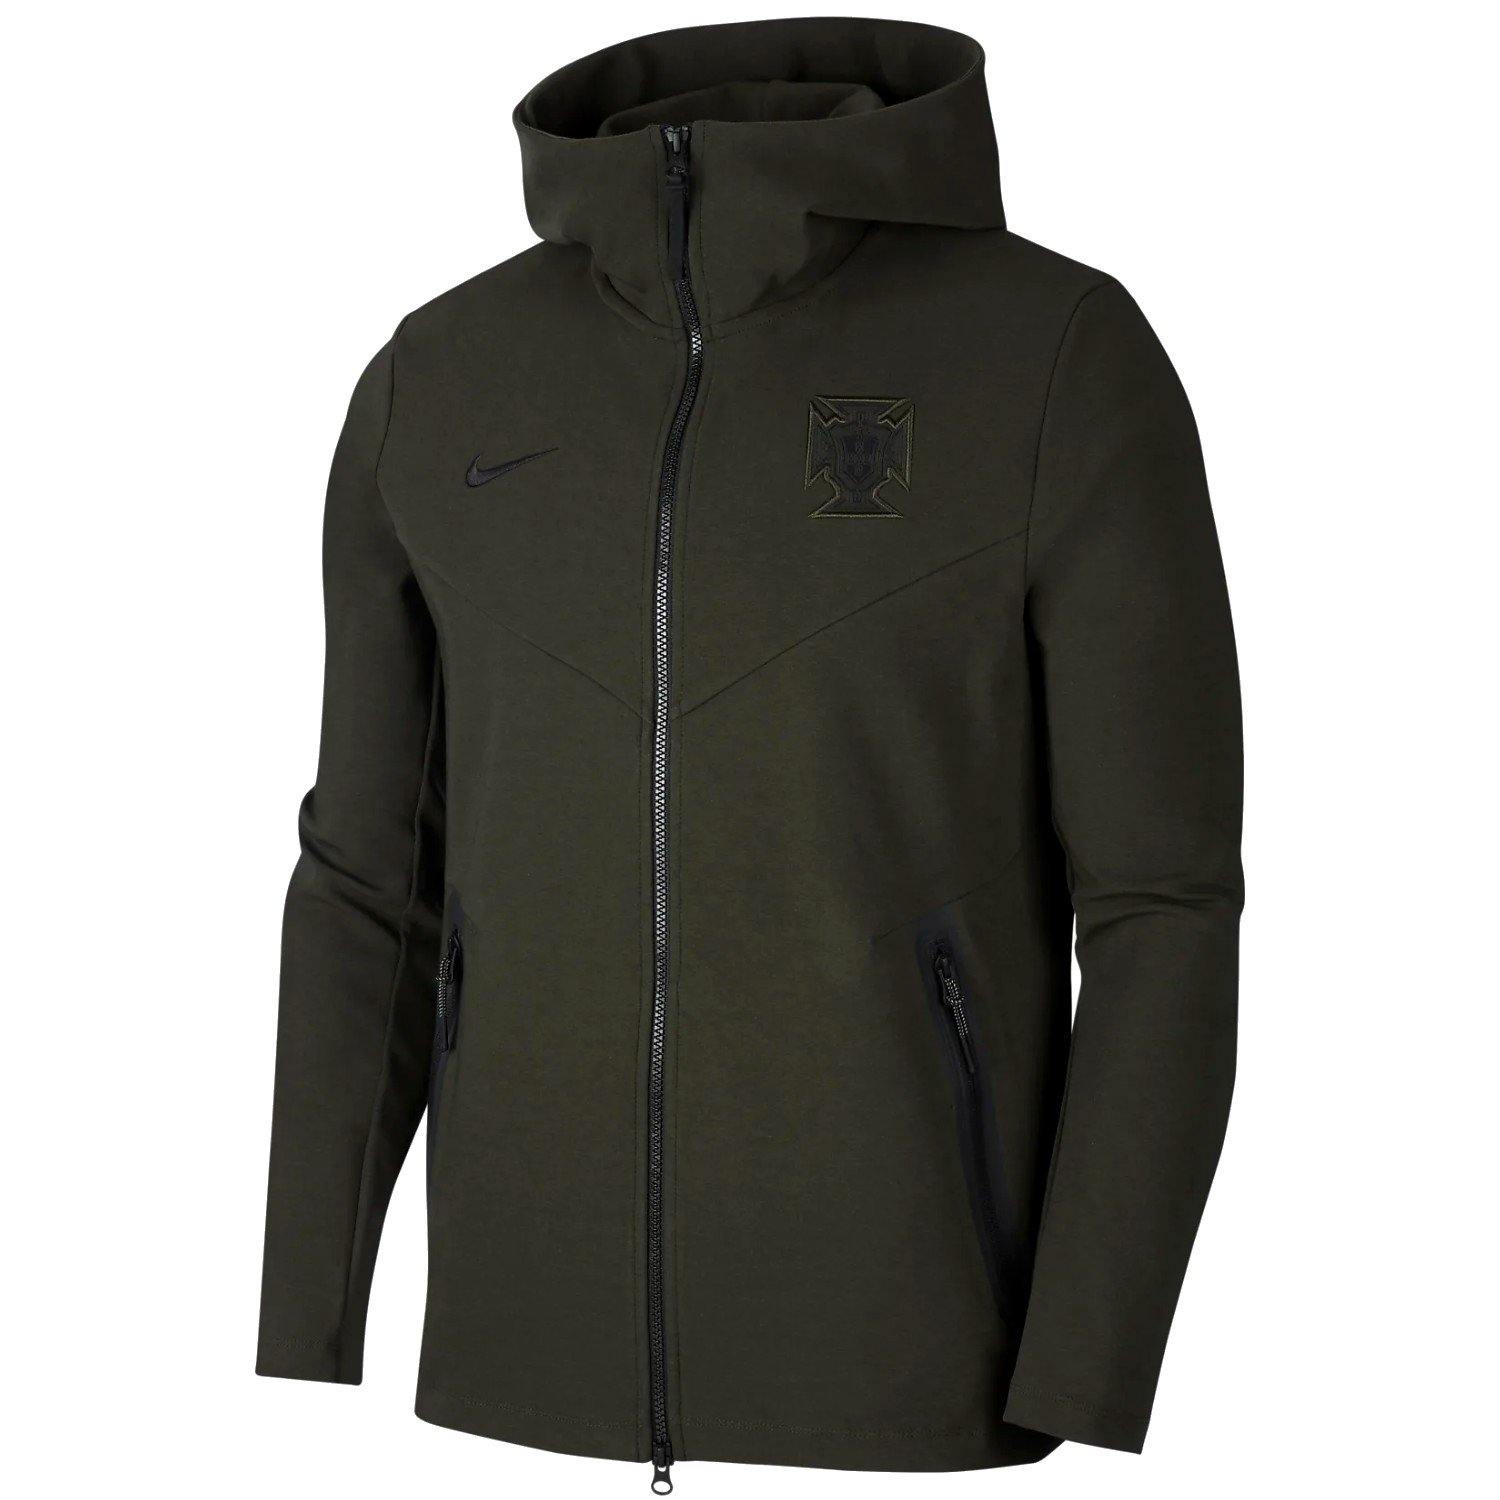 Diversen graan verkopen Portugal Tech pro presentation soccer jacket 2020/21 - Nike –  SoccerTracksuits.com